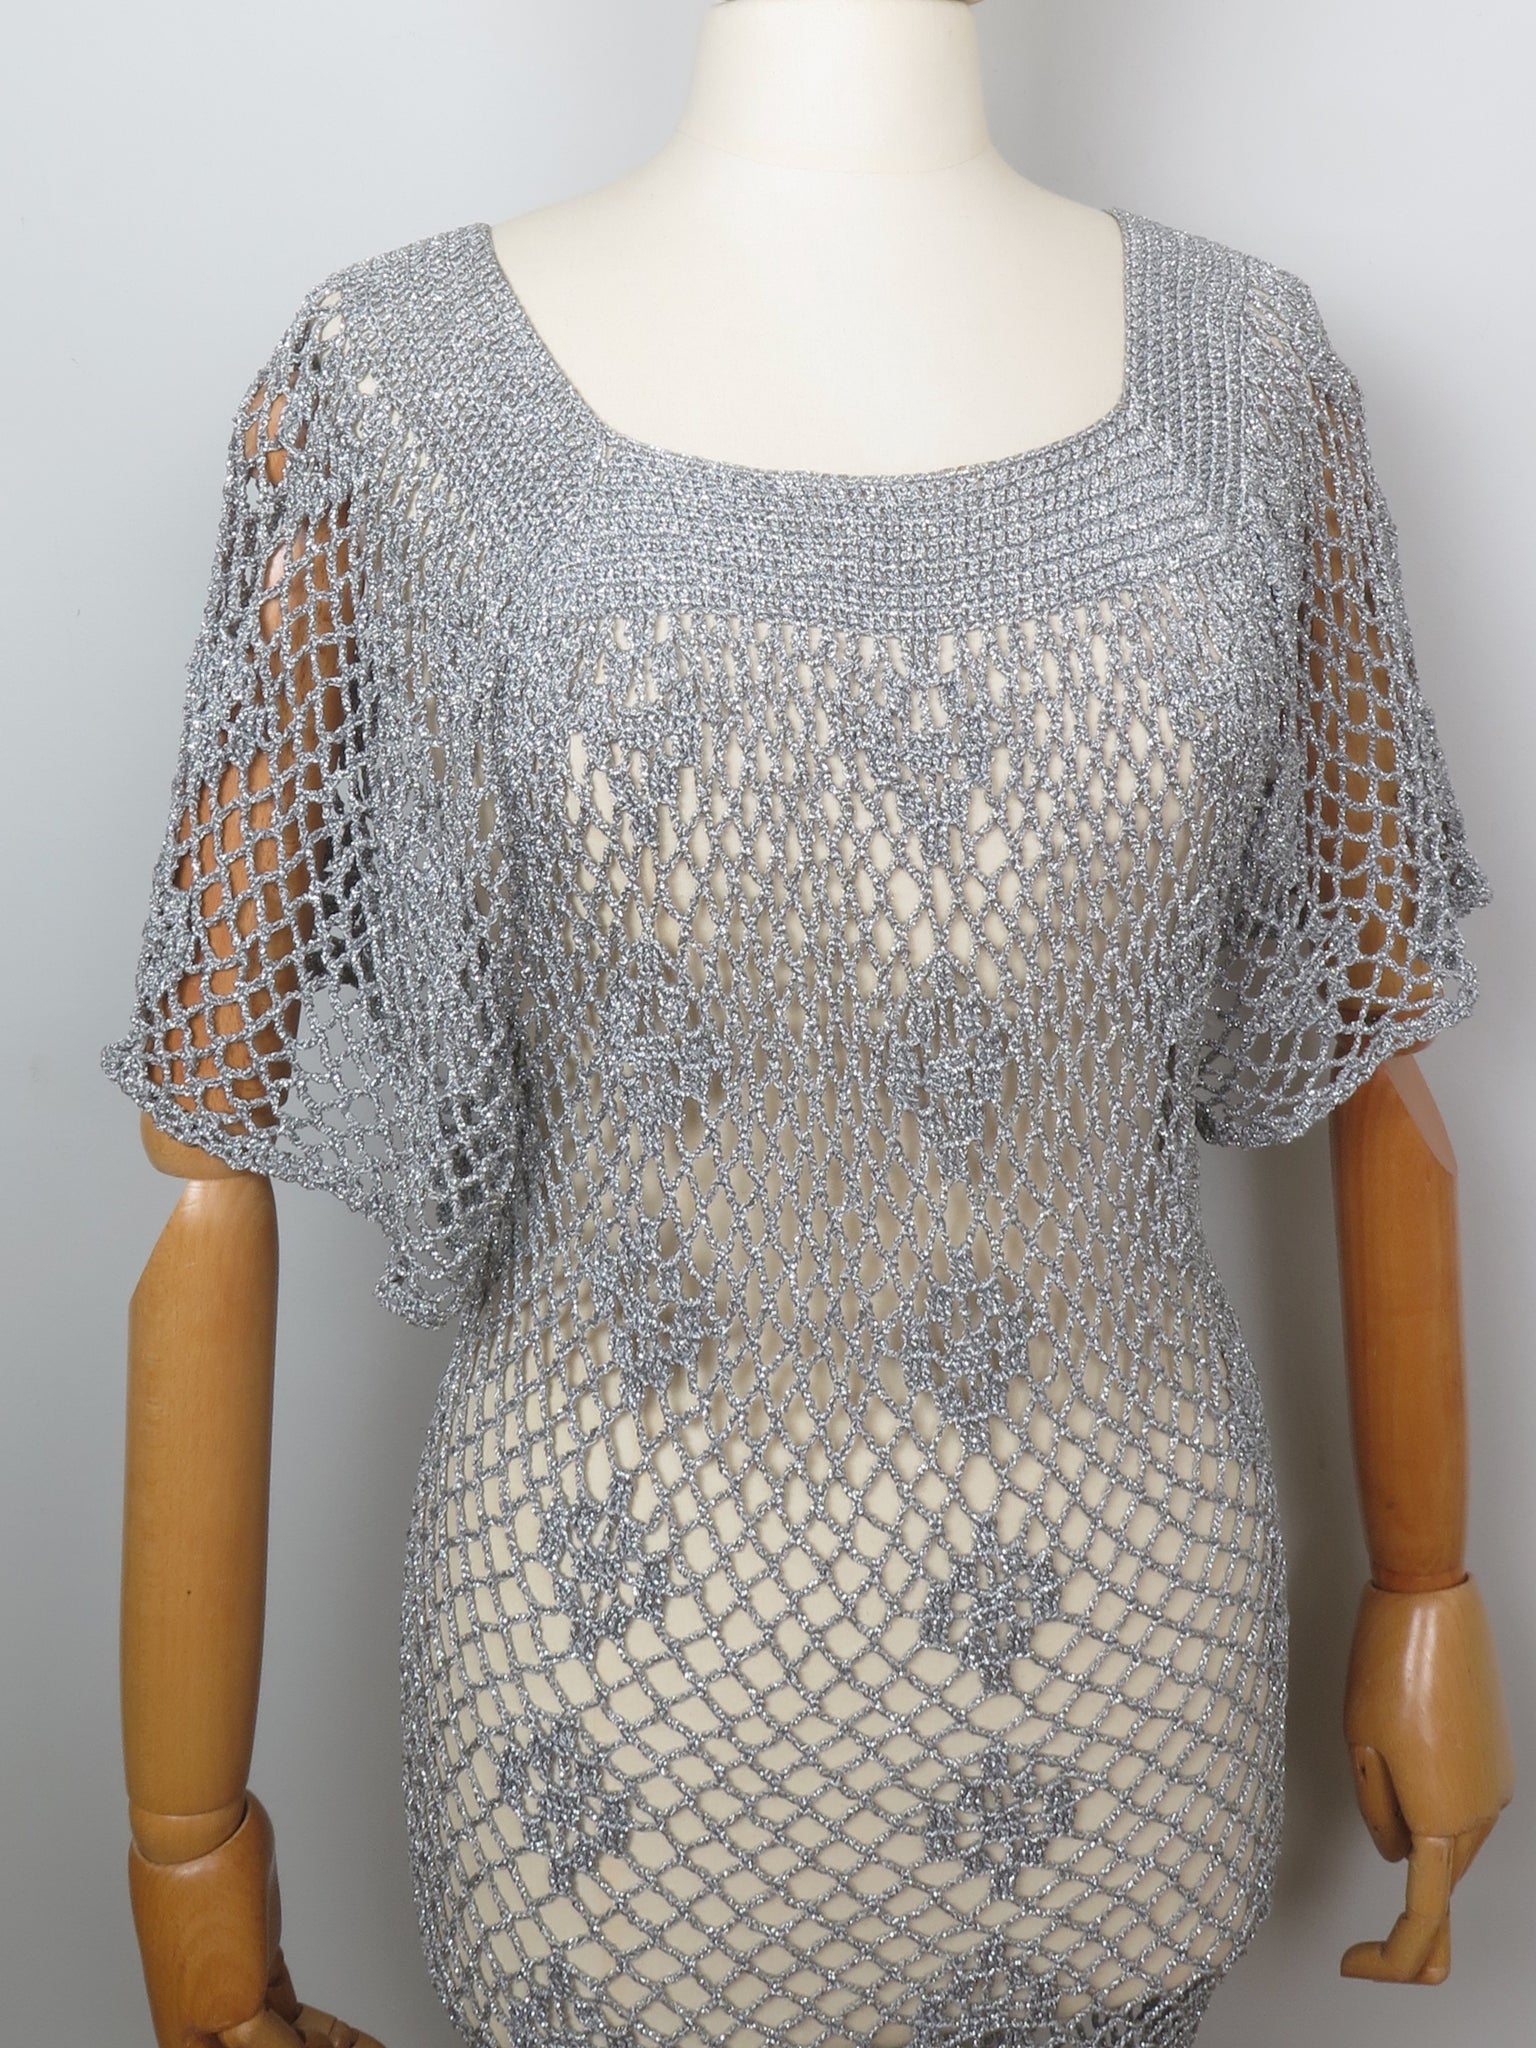 1970s Silver Hand Crochet Dress S/M